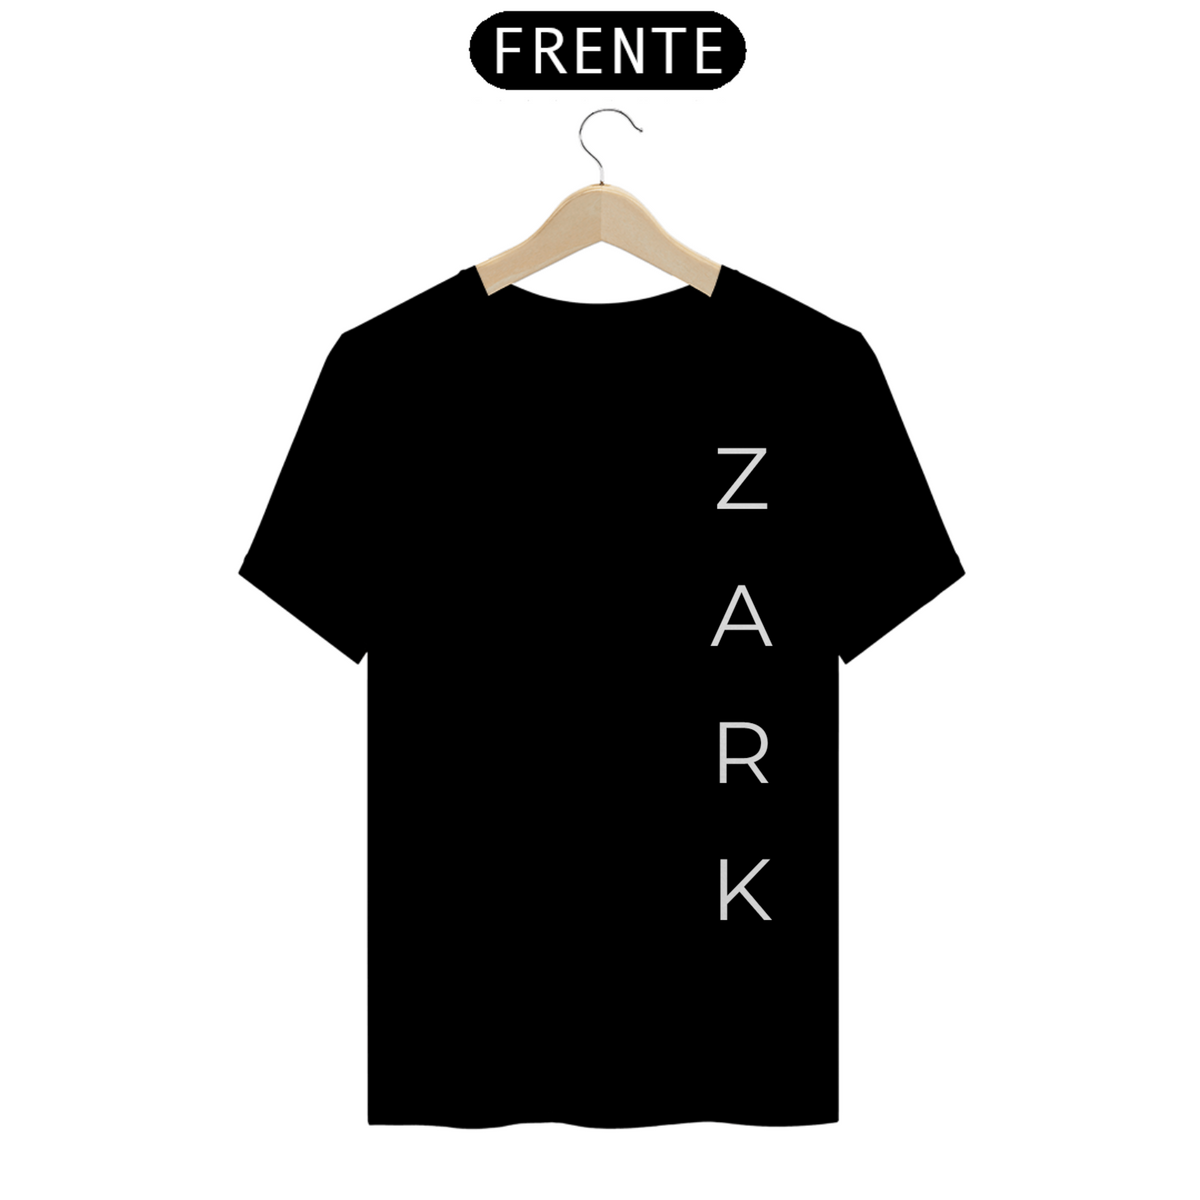 Nome do produto: T-Shirt Day One Zark Wear (Lateral Branca)